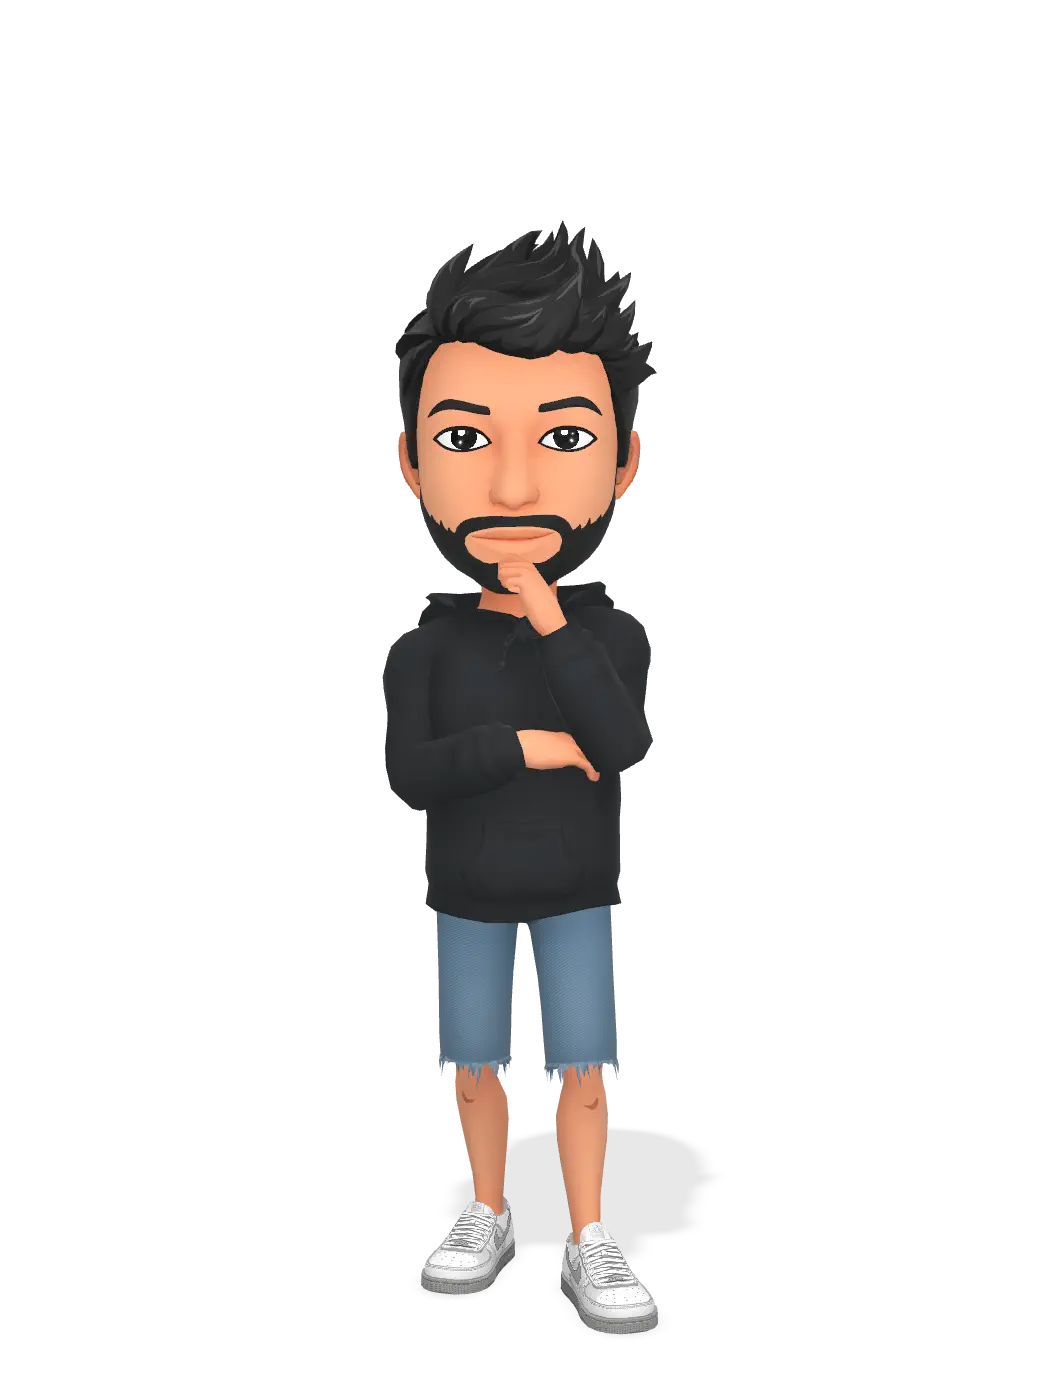 3D Bitmoji for dangsh_13 avatar